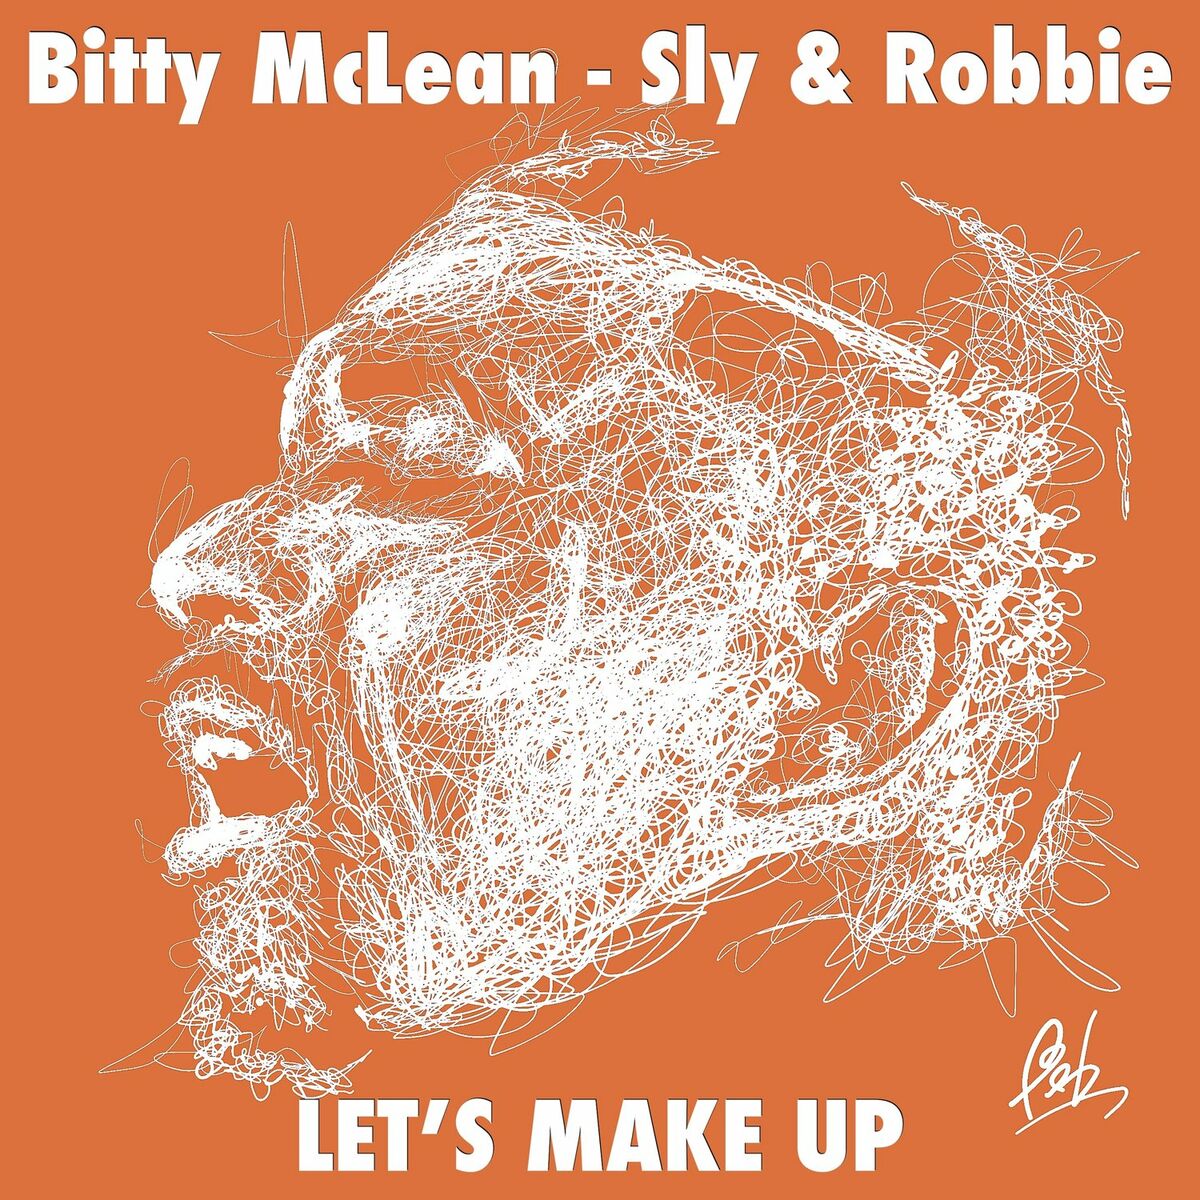 Bitty McLean: albums, songs, playlists | Listen on Deezer